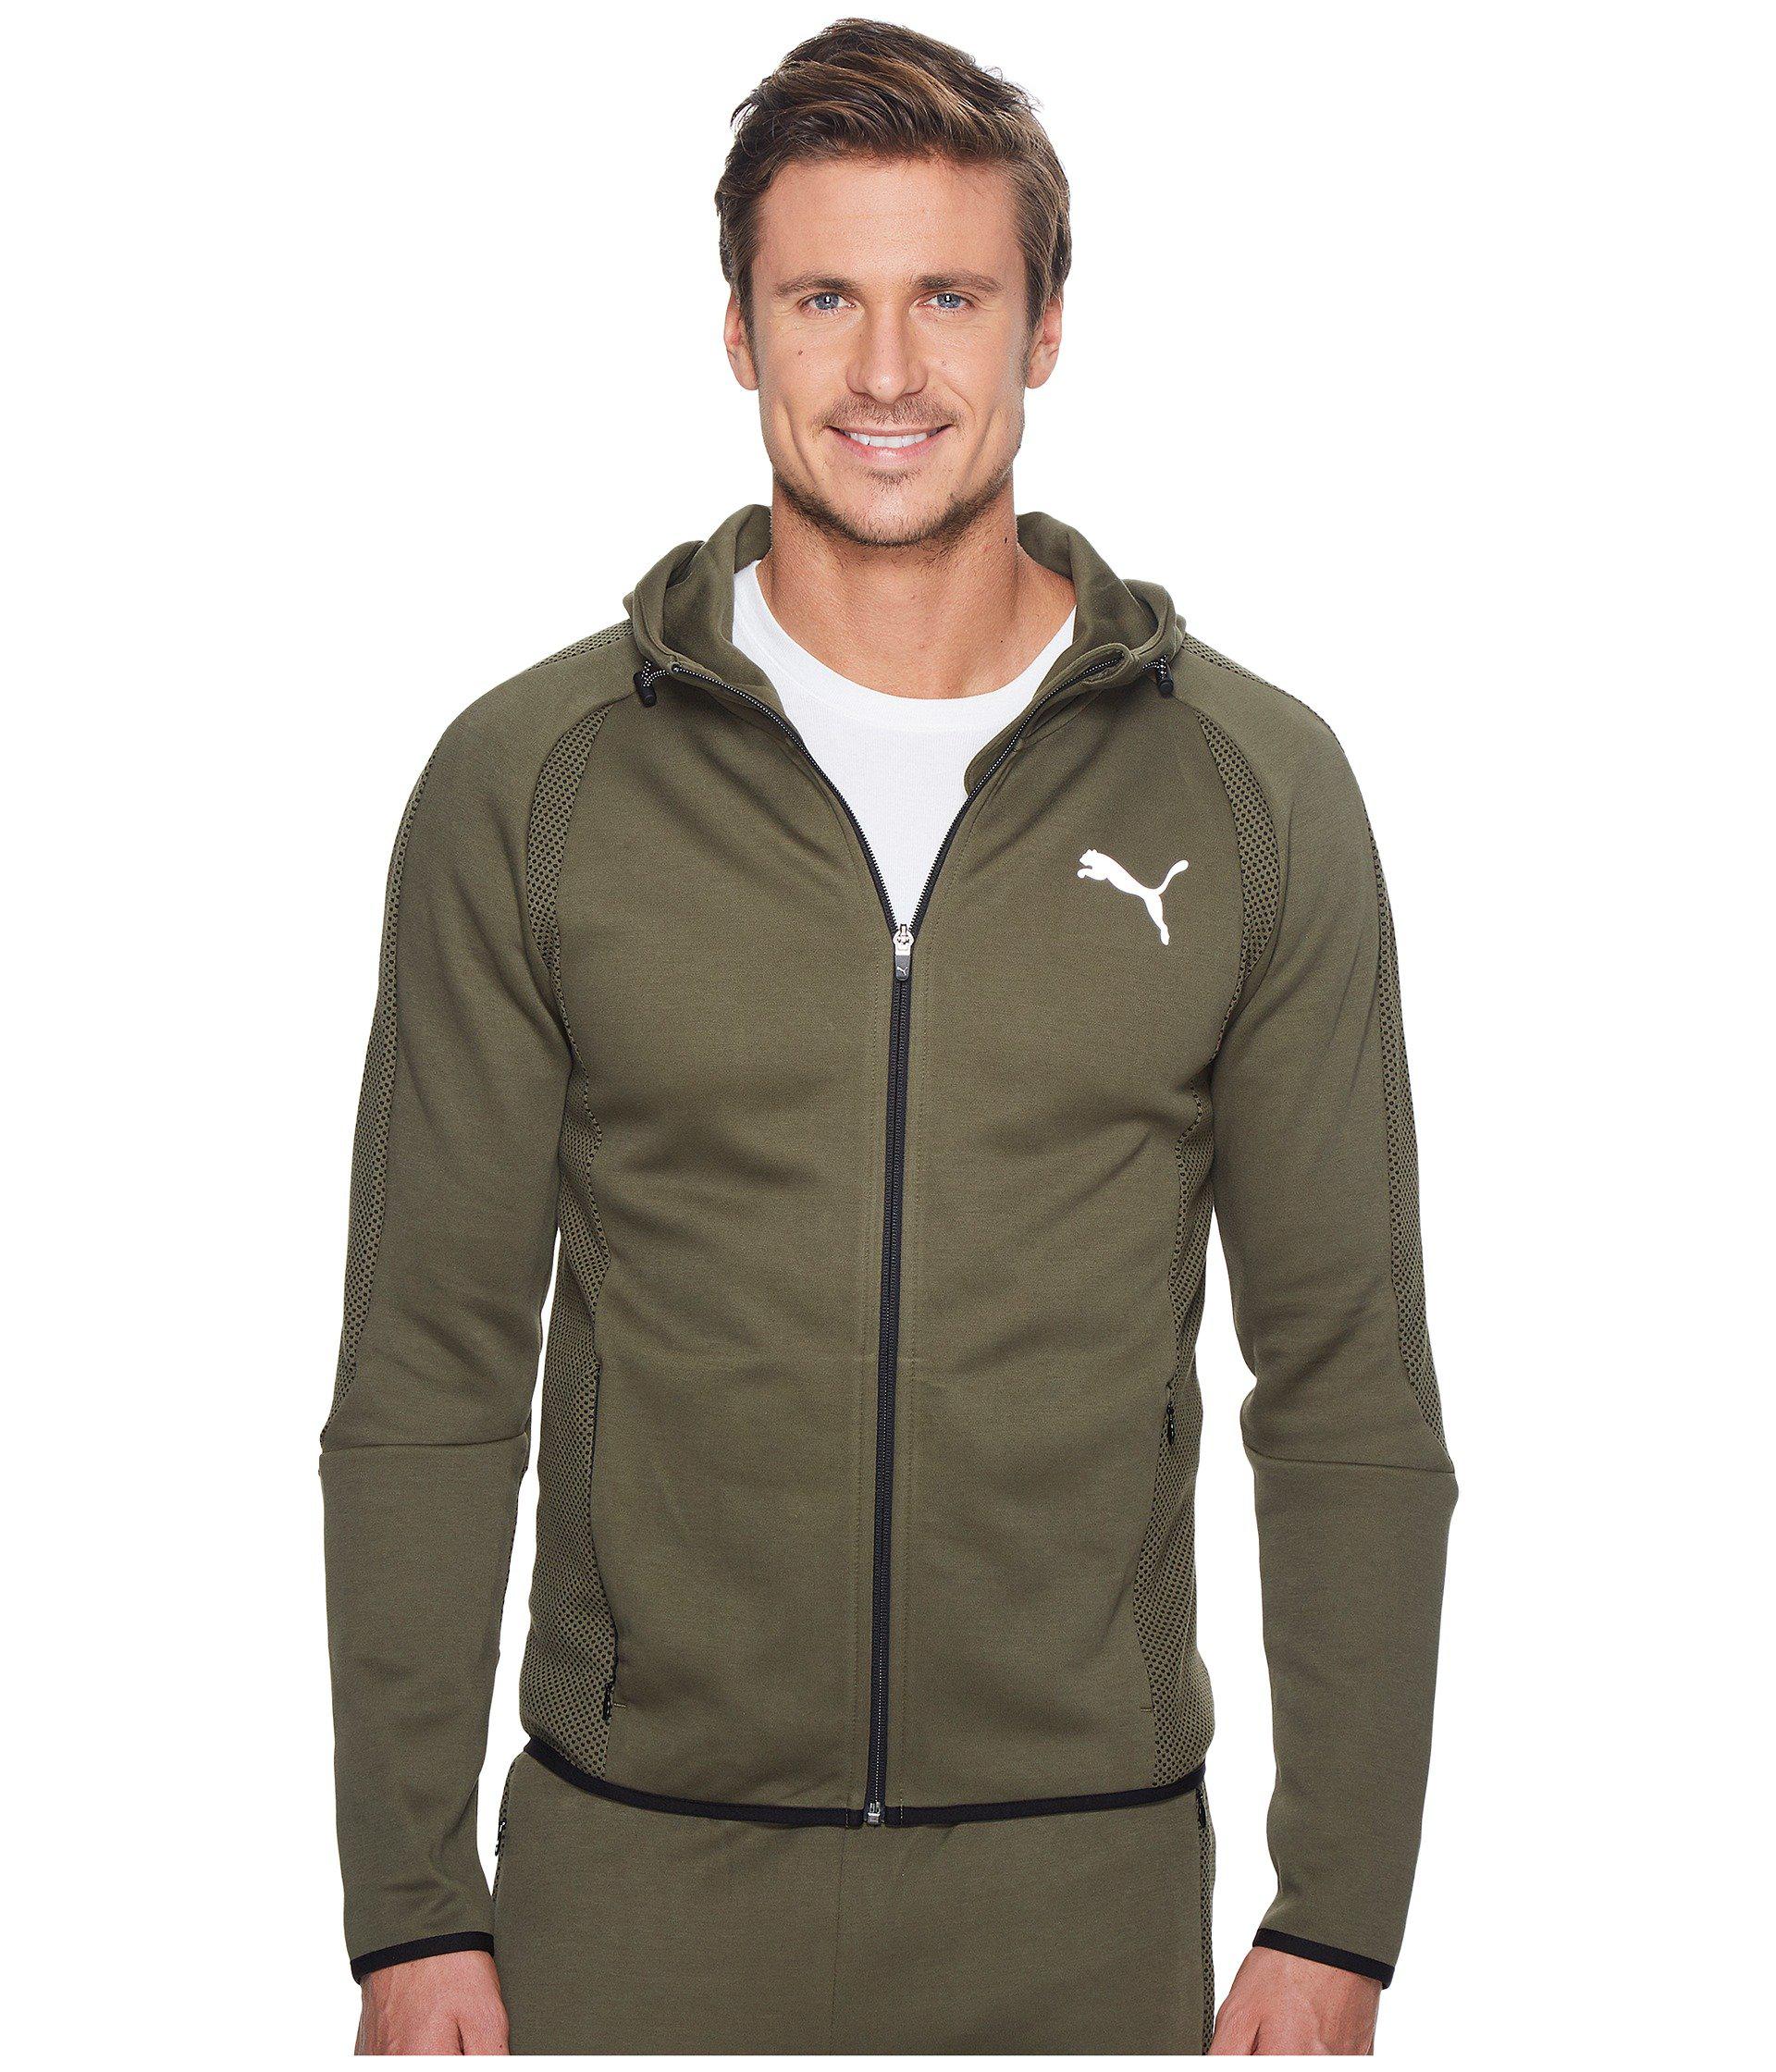 puma evostripe ultimate jacket - 58% OFF - plykart.com